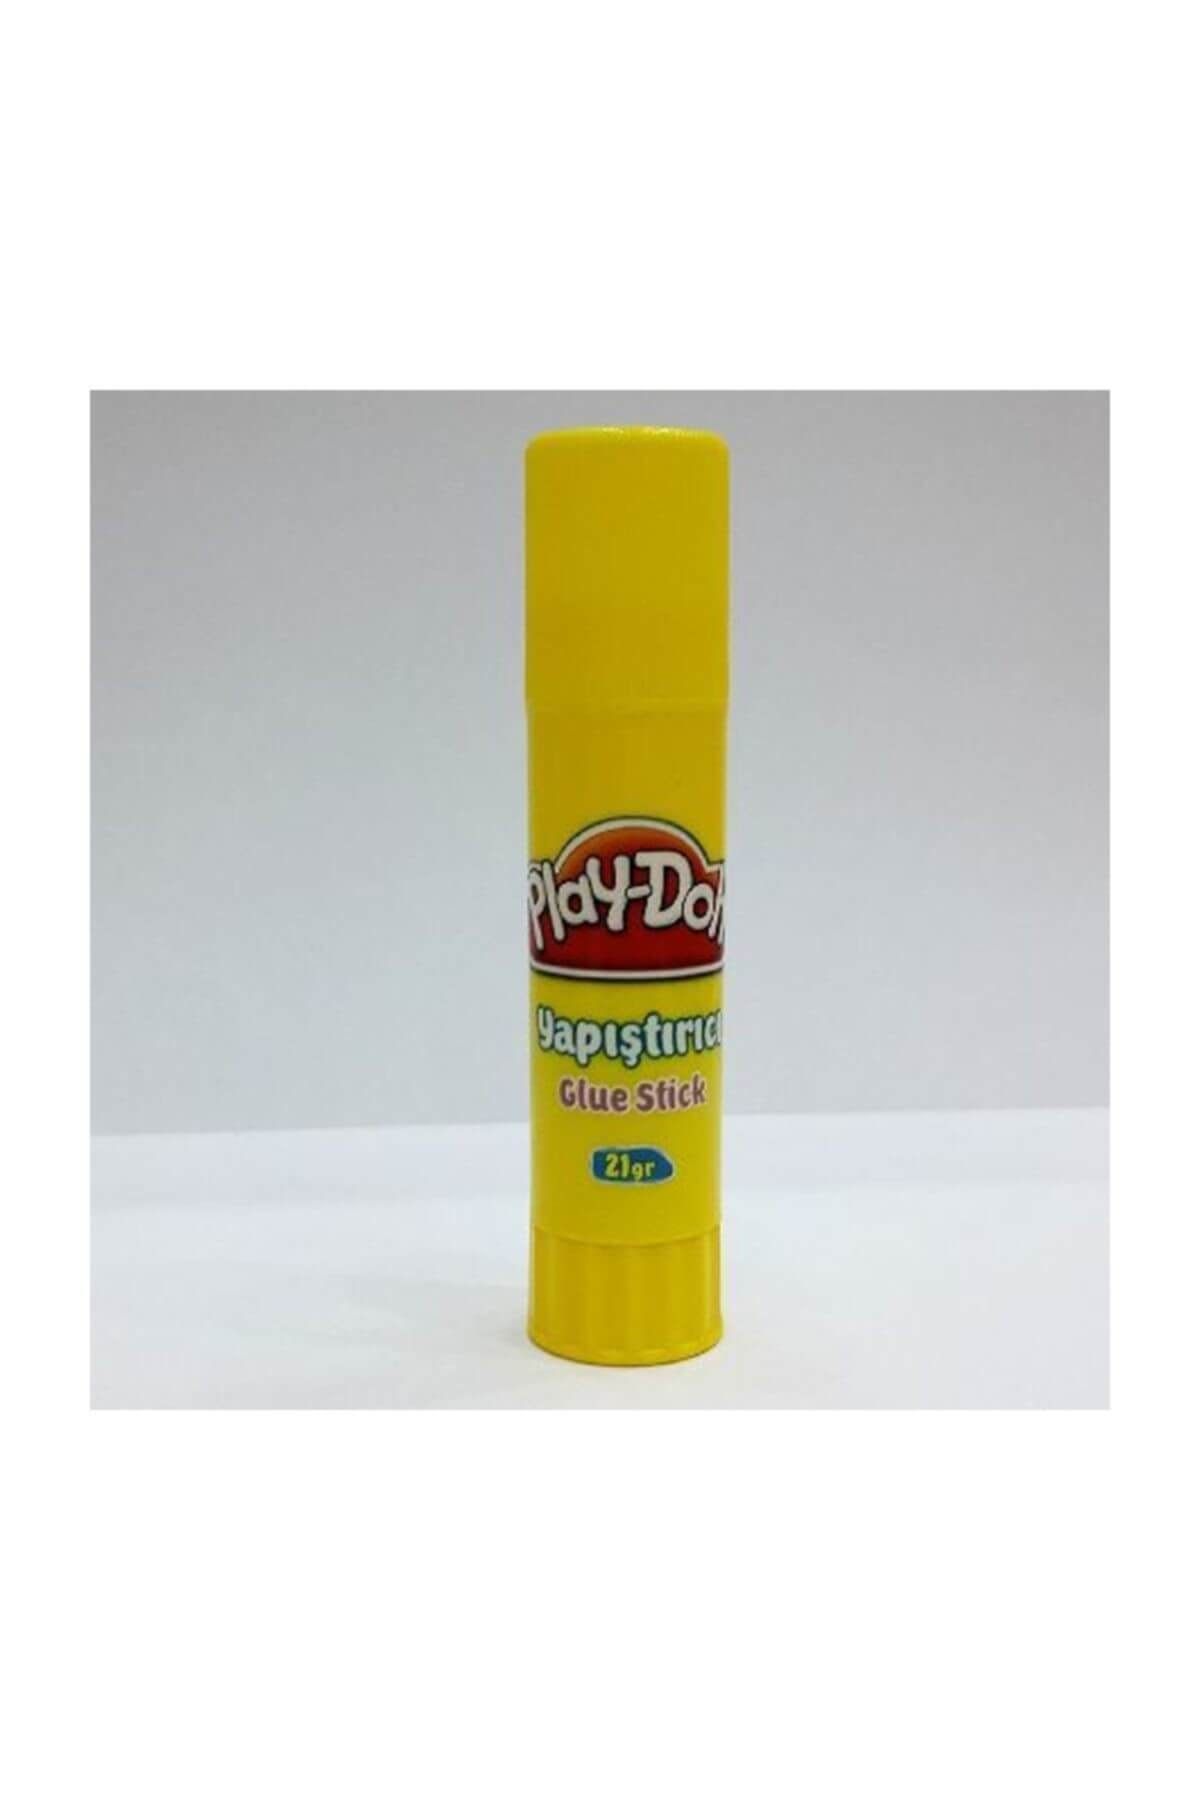 Play Doh Play-doh Glue Stick Yapıştırıcı 45 Gr. 12 Li